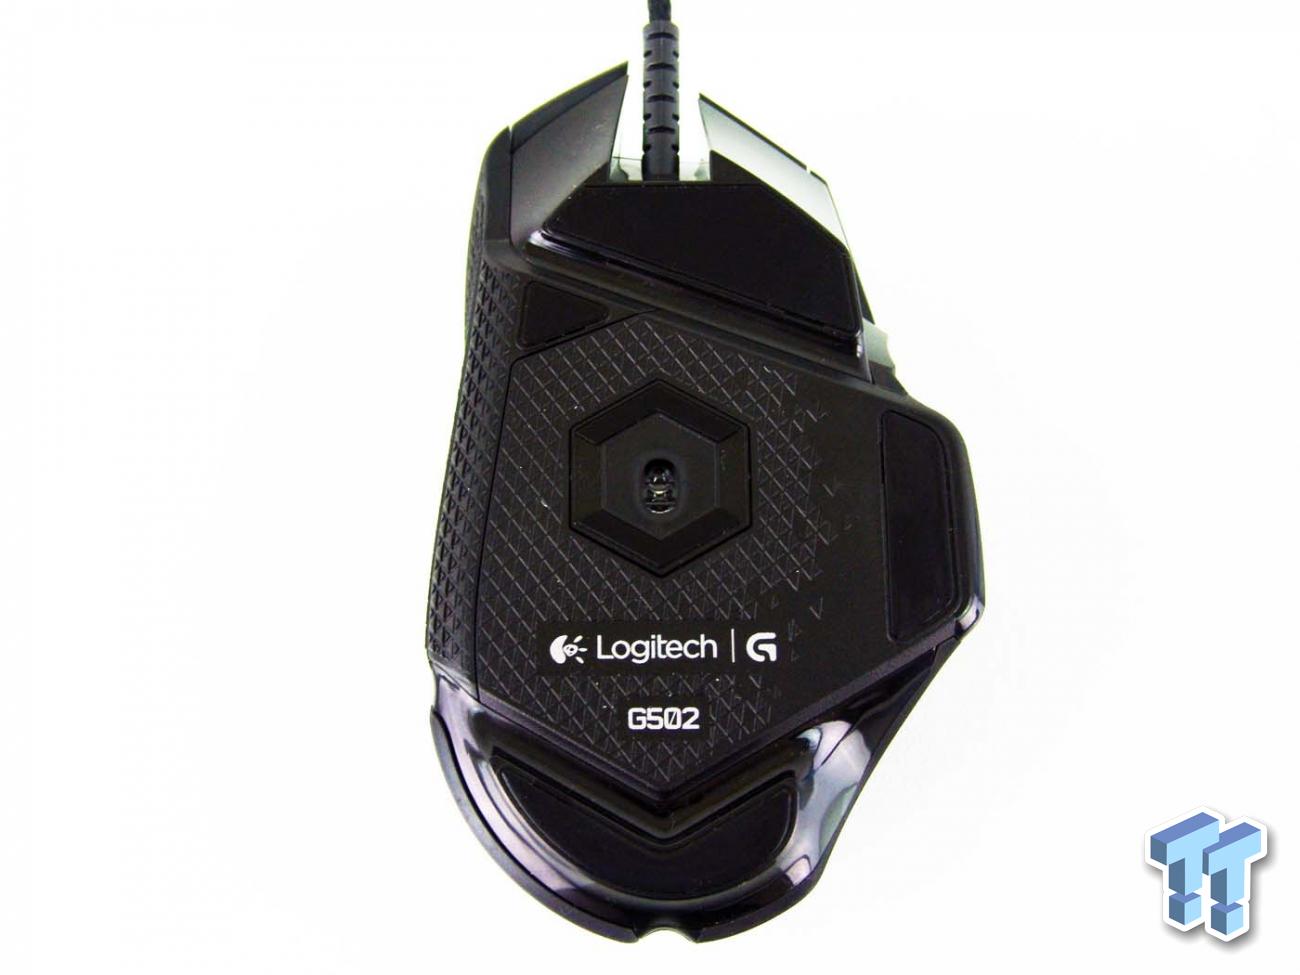 Springboard rib castle Logitech G502 Proteus Spectrum RGB Tunable Gaming Mouse Review | TweakTown